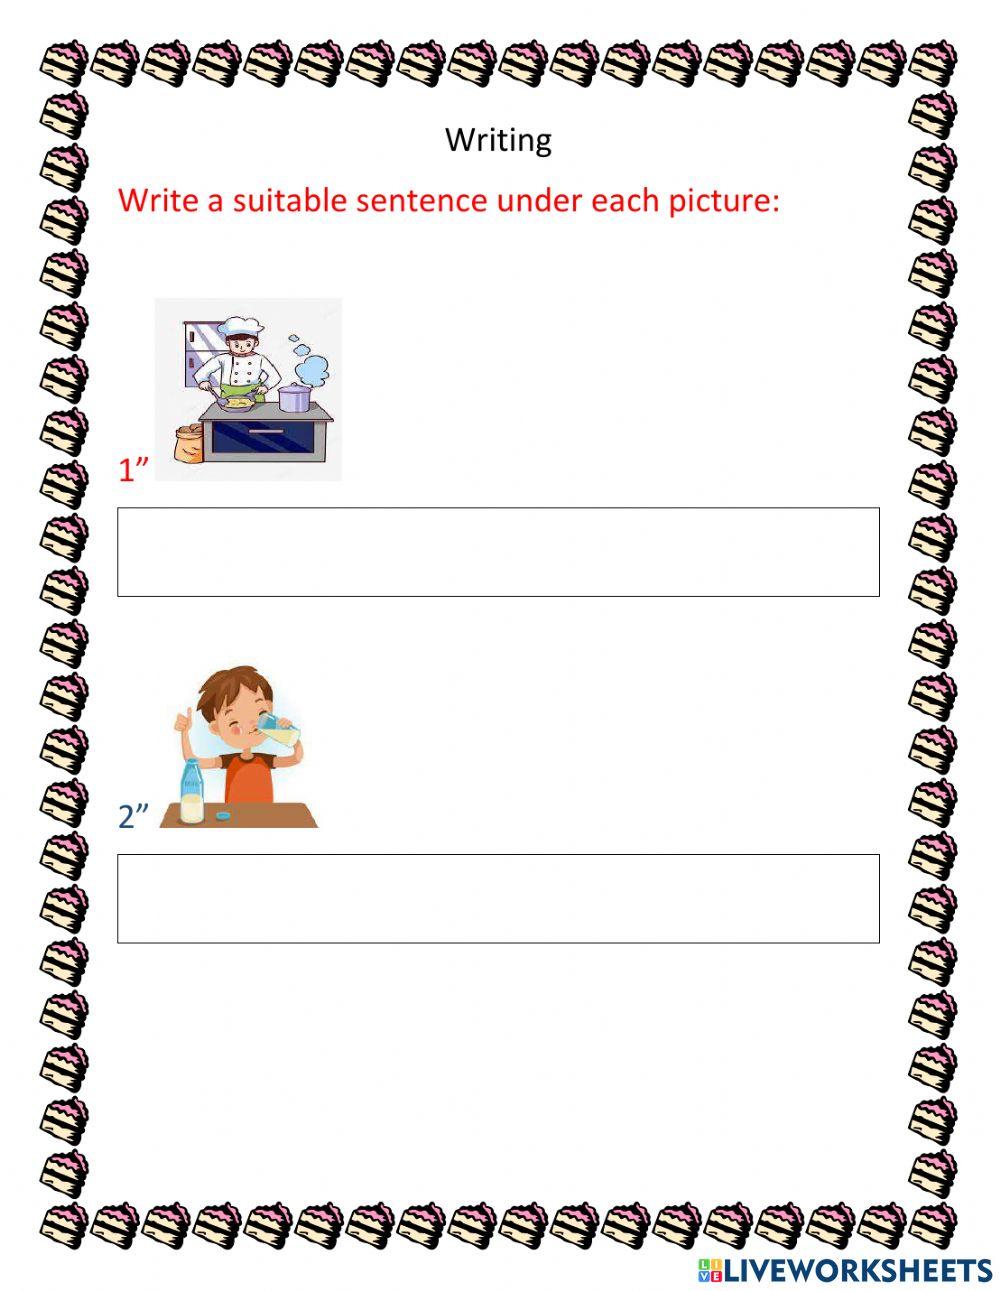 Write a sentence